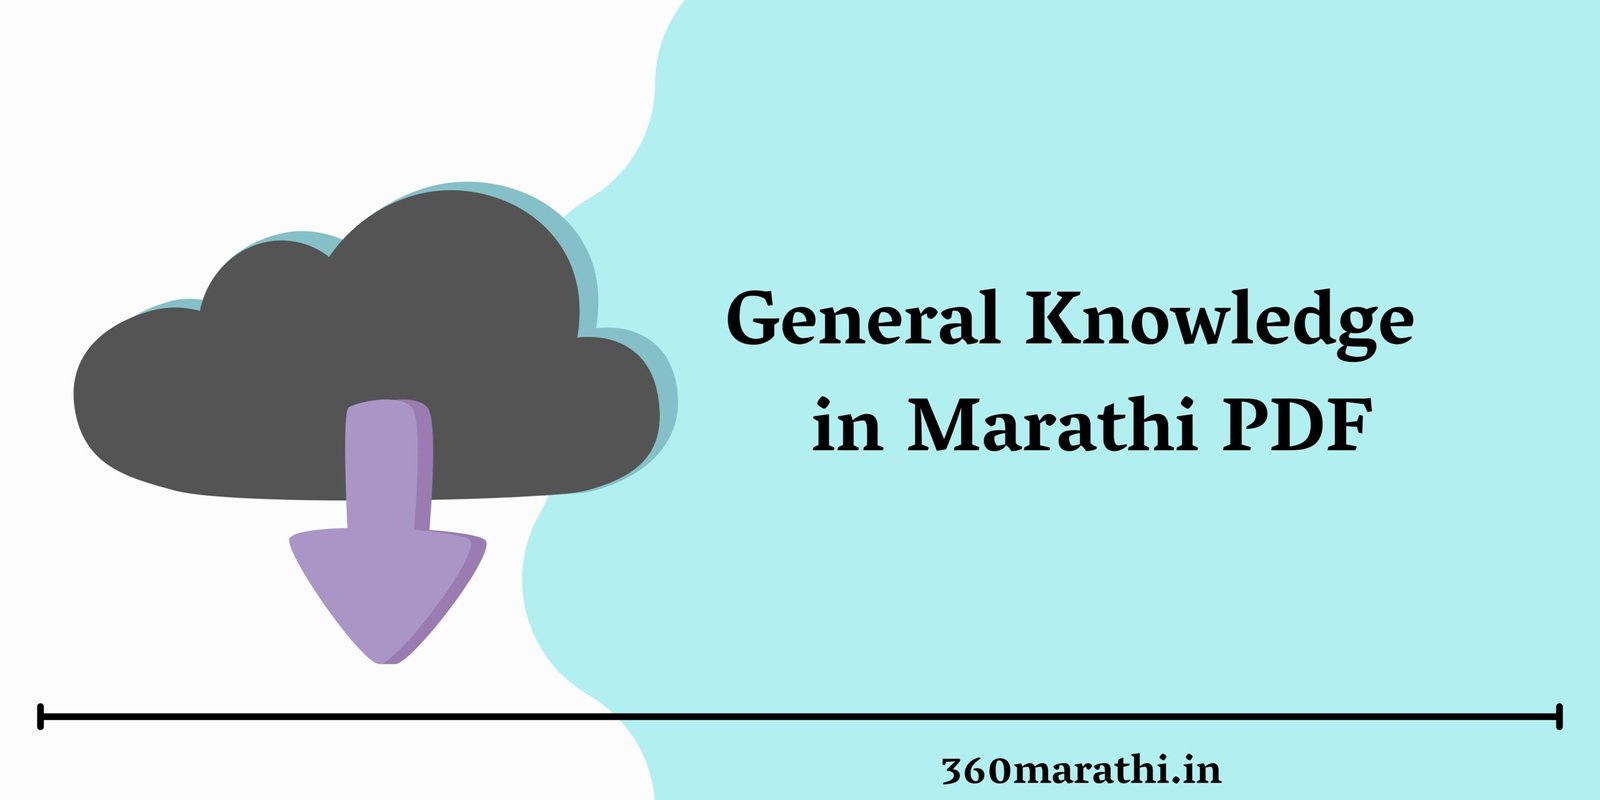 General Knowledge in Marathi PDF